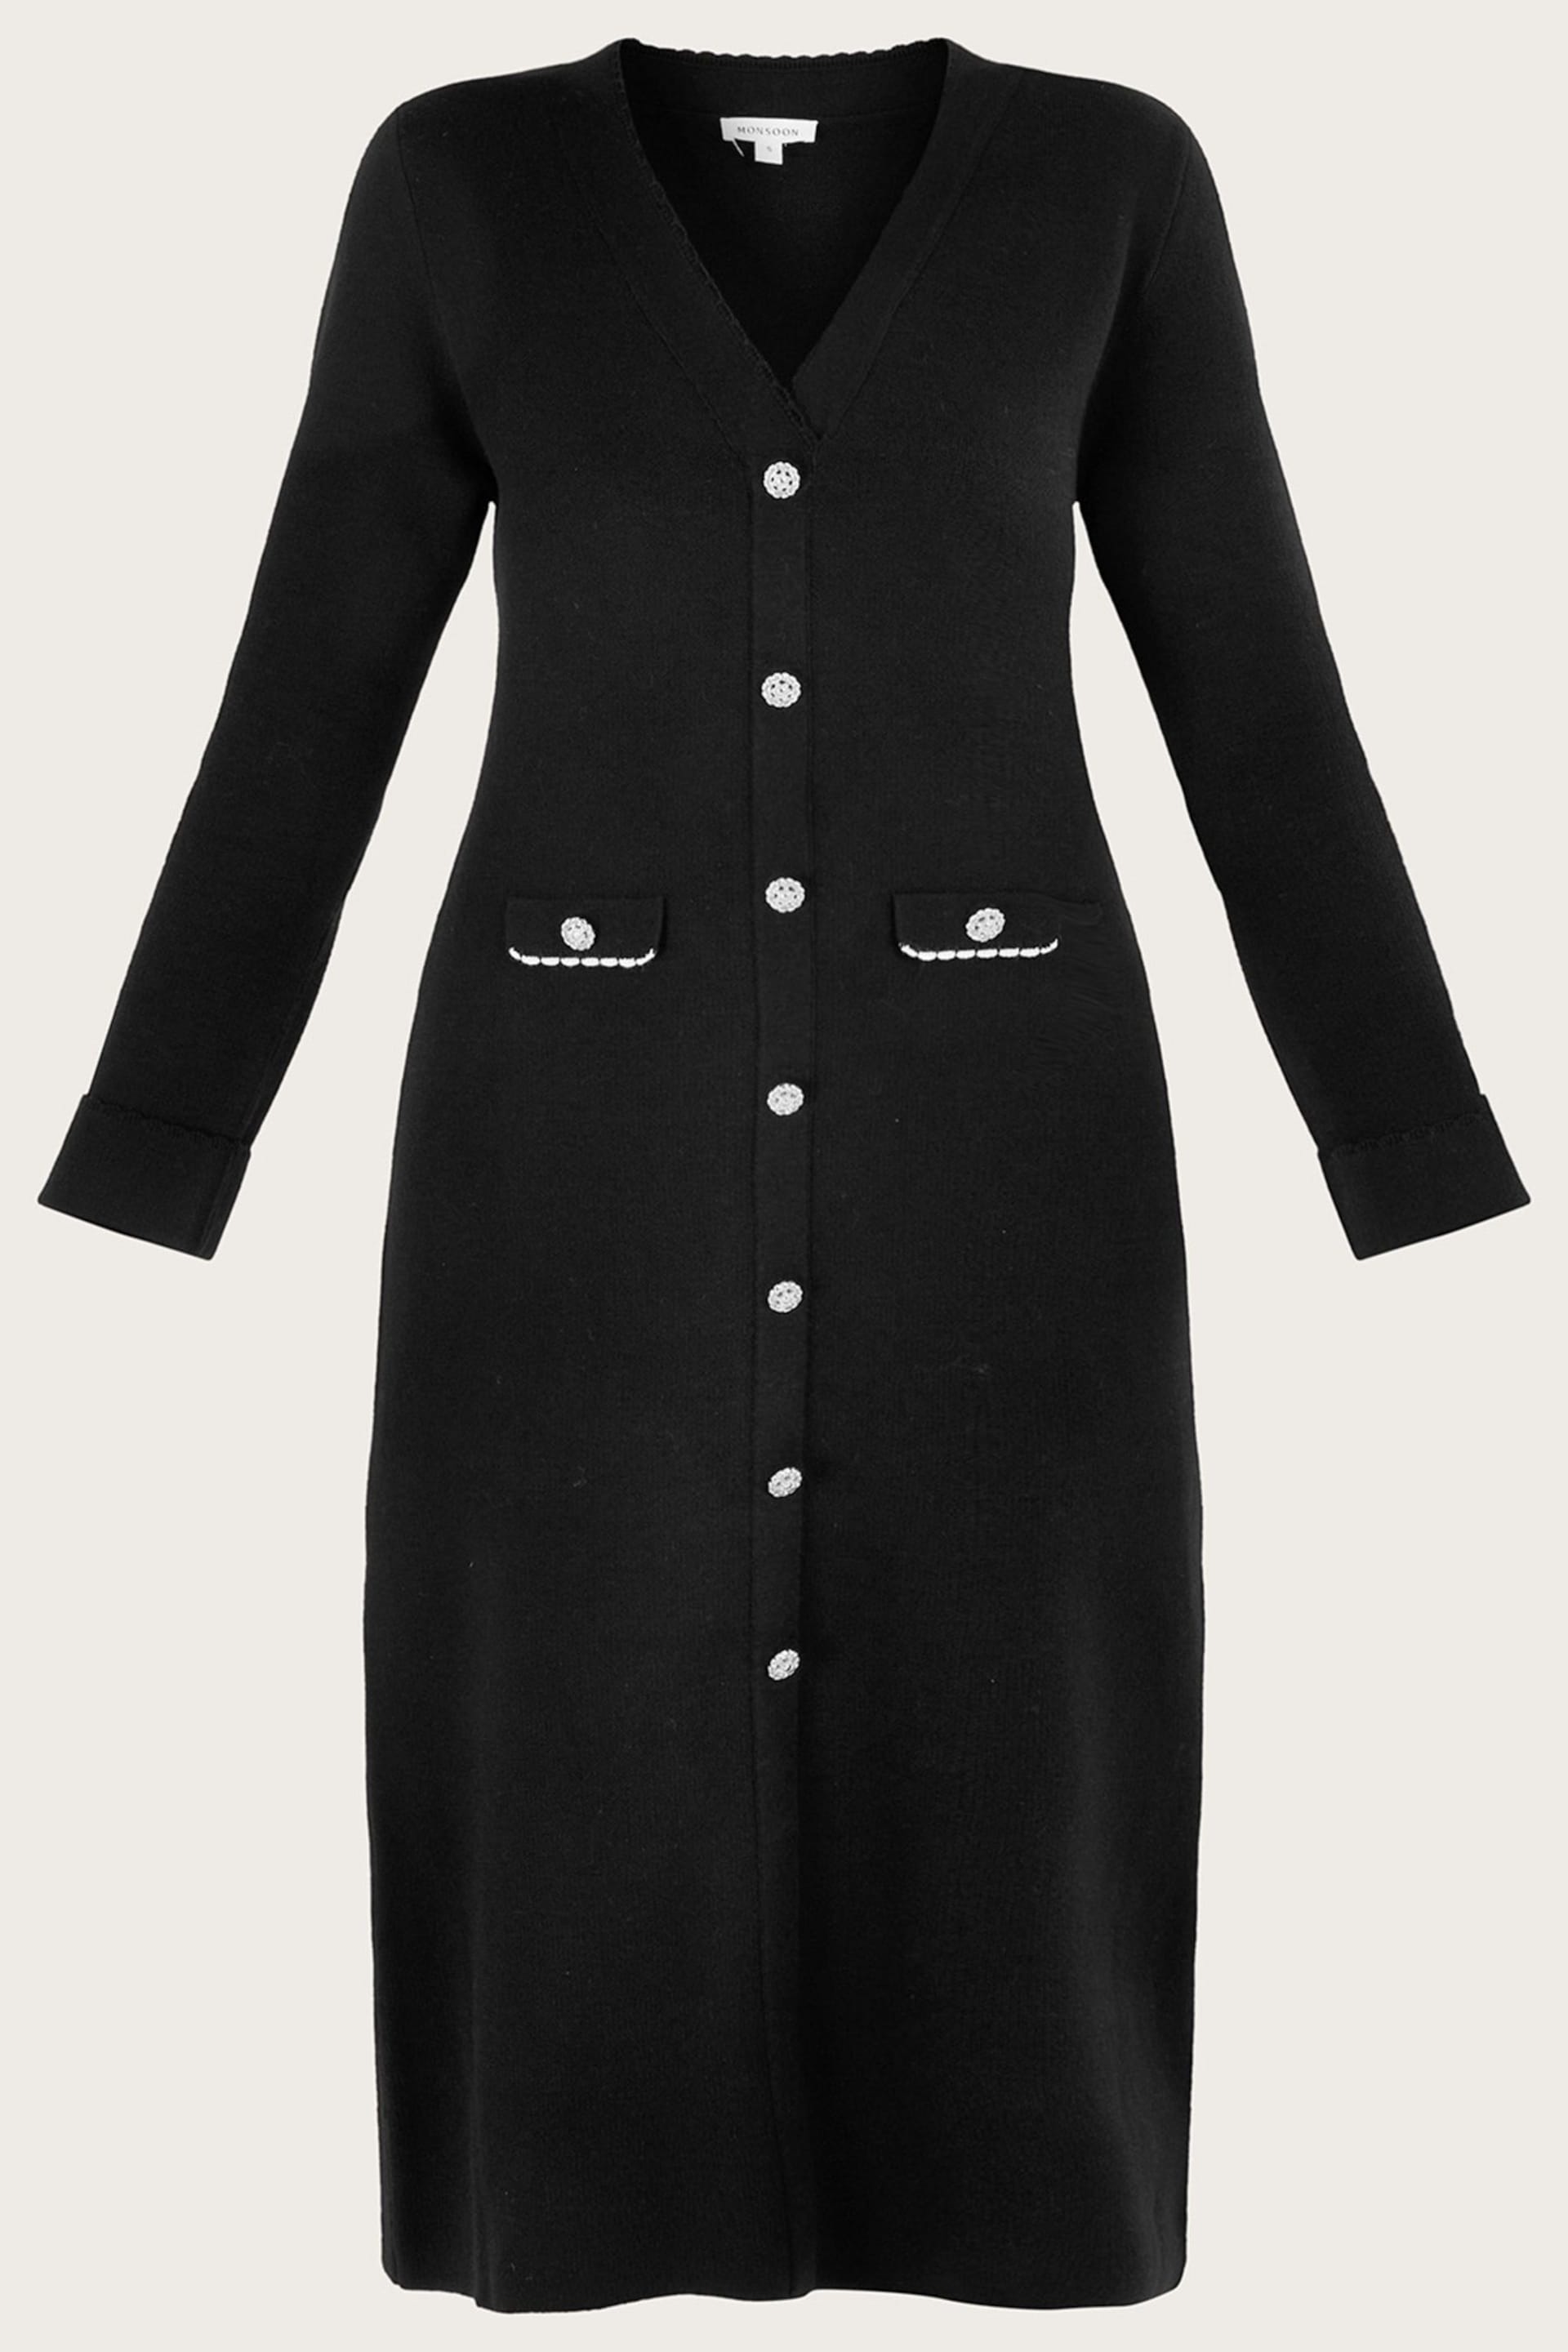 Monsoon Black Pocket Detail Knit Dress - Image 5 of 5